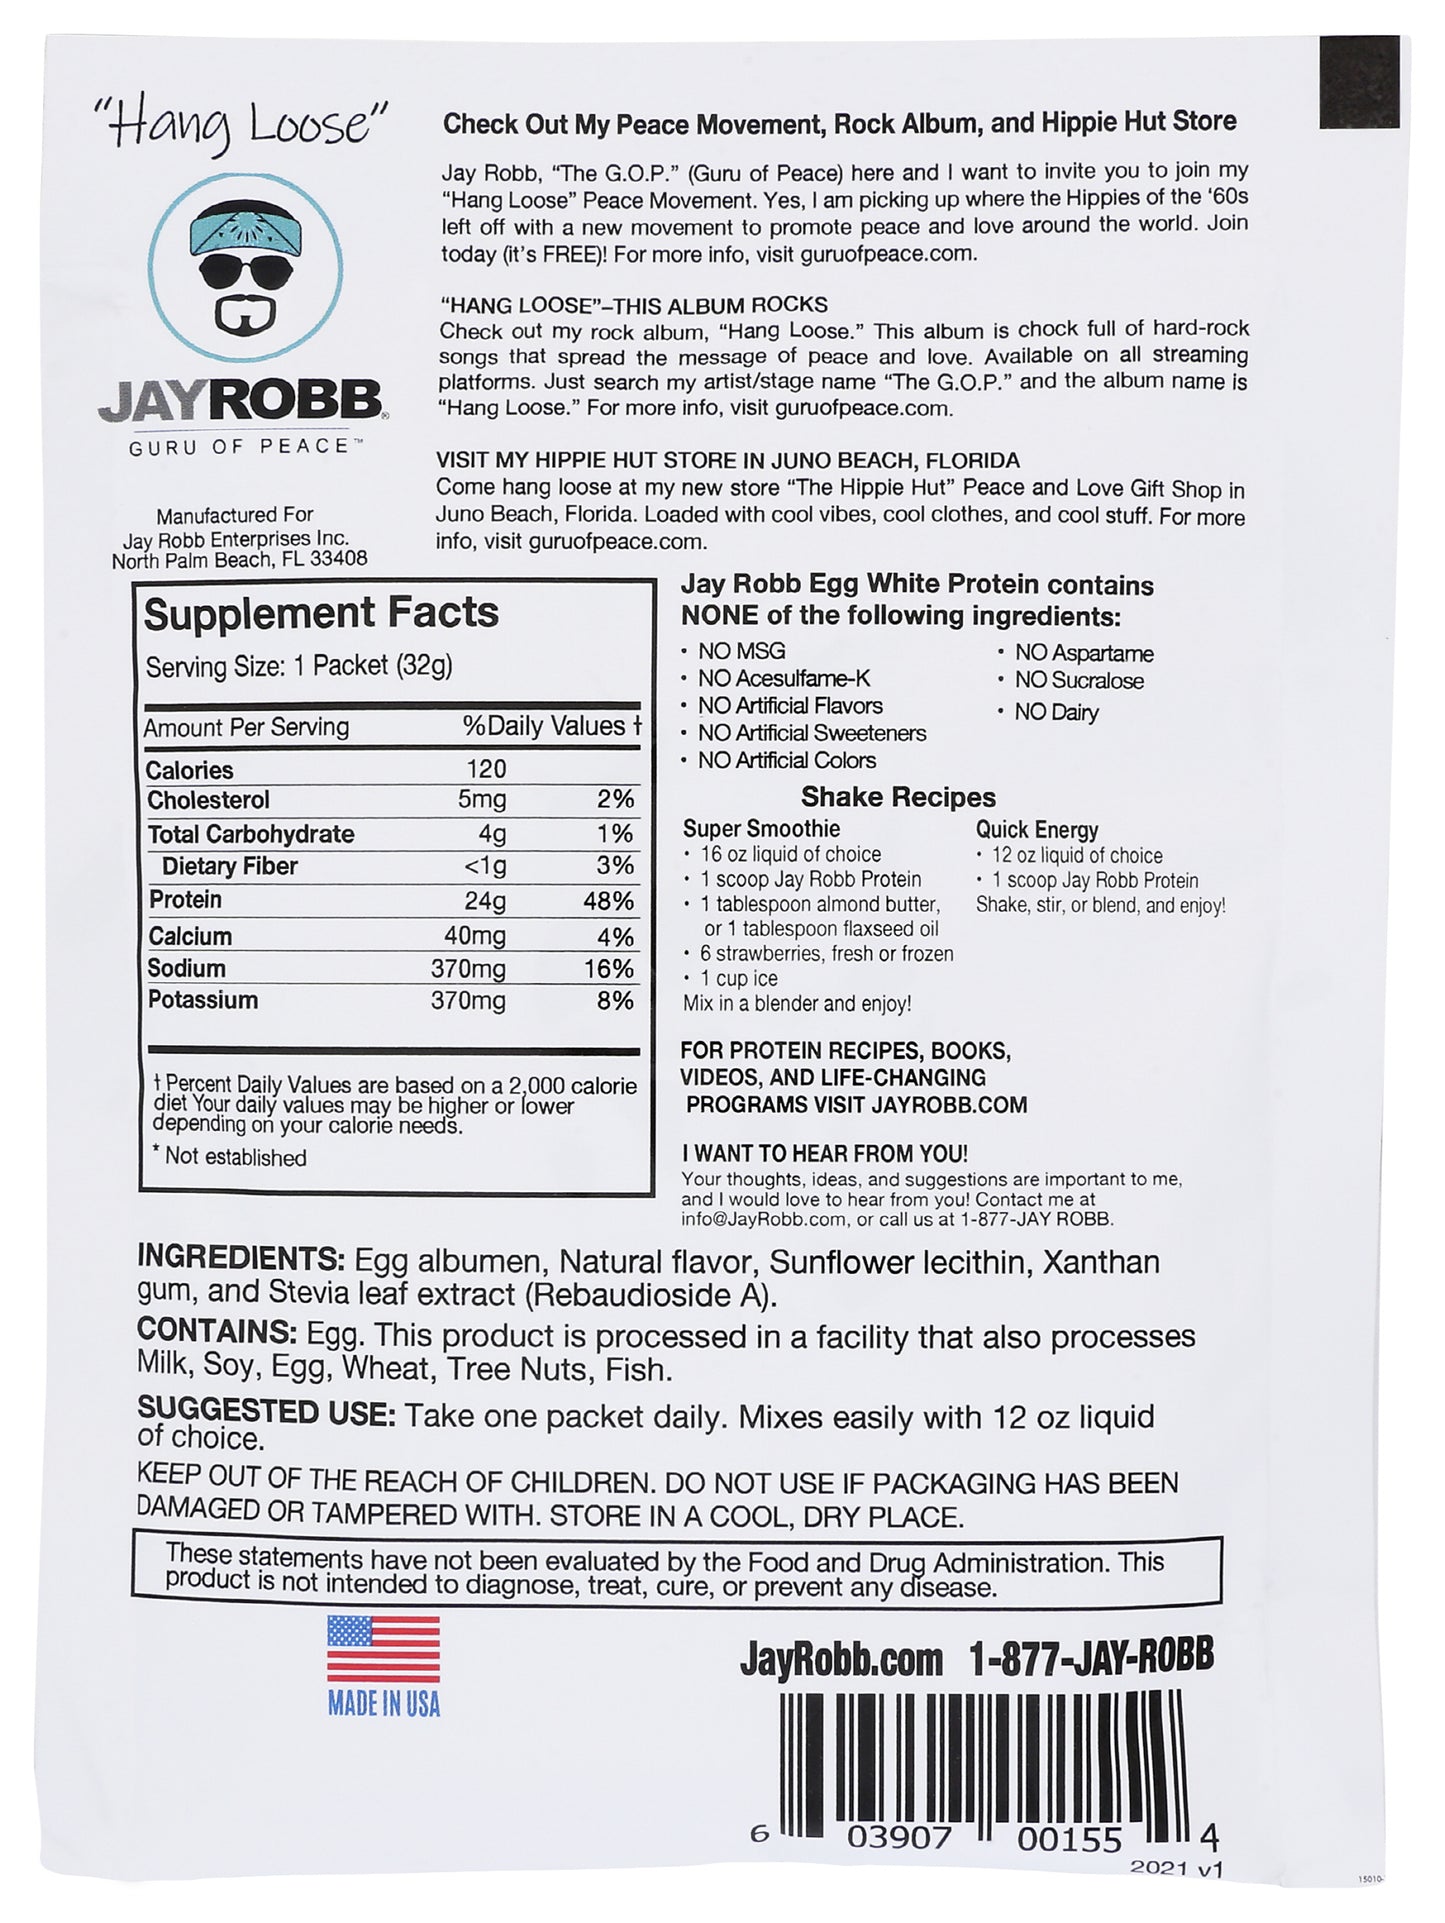 Jay Robb Vanilla Flavored Egg White Protein Powder 32g Back of Bag